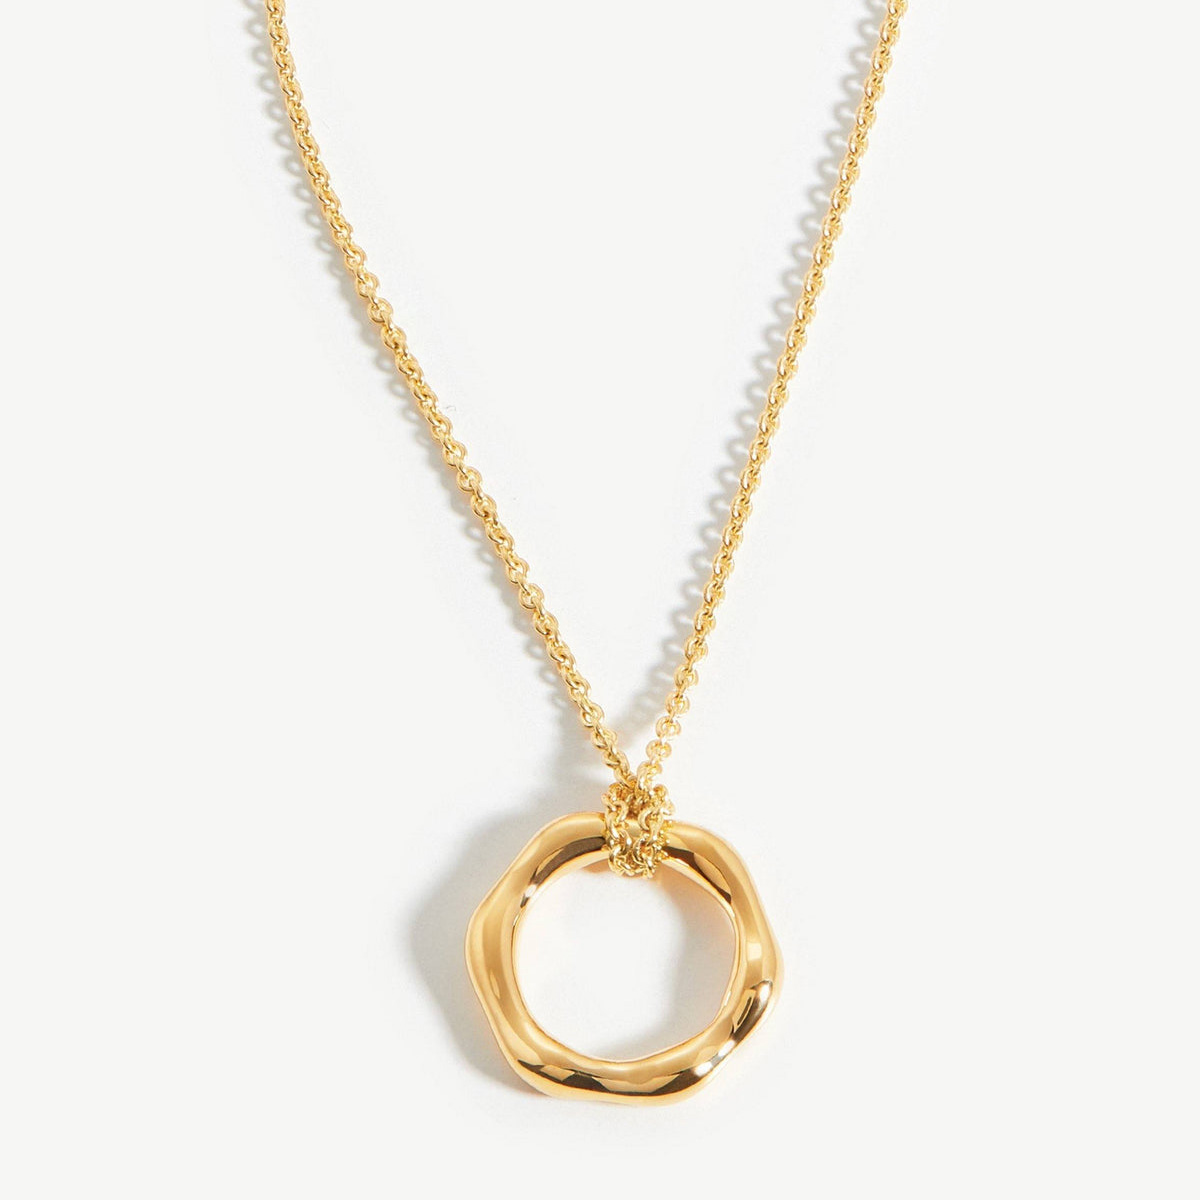 Custom Designs – Wholesale Silver Jewelry mini molten pendant necklace 18ct gold plated vermeil